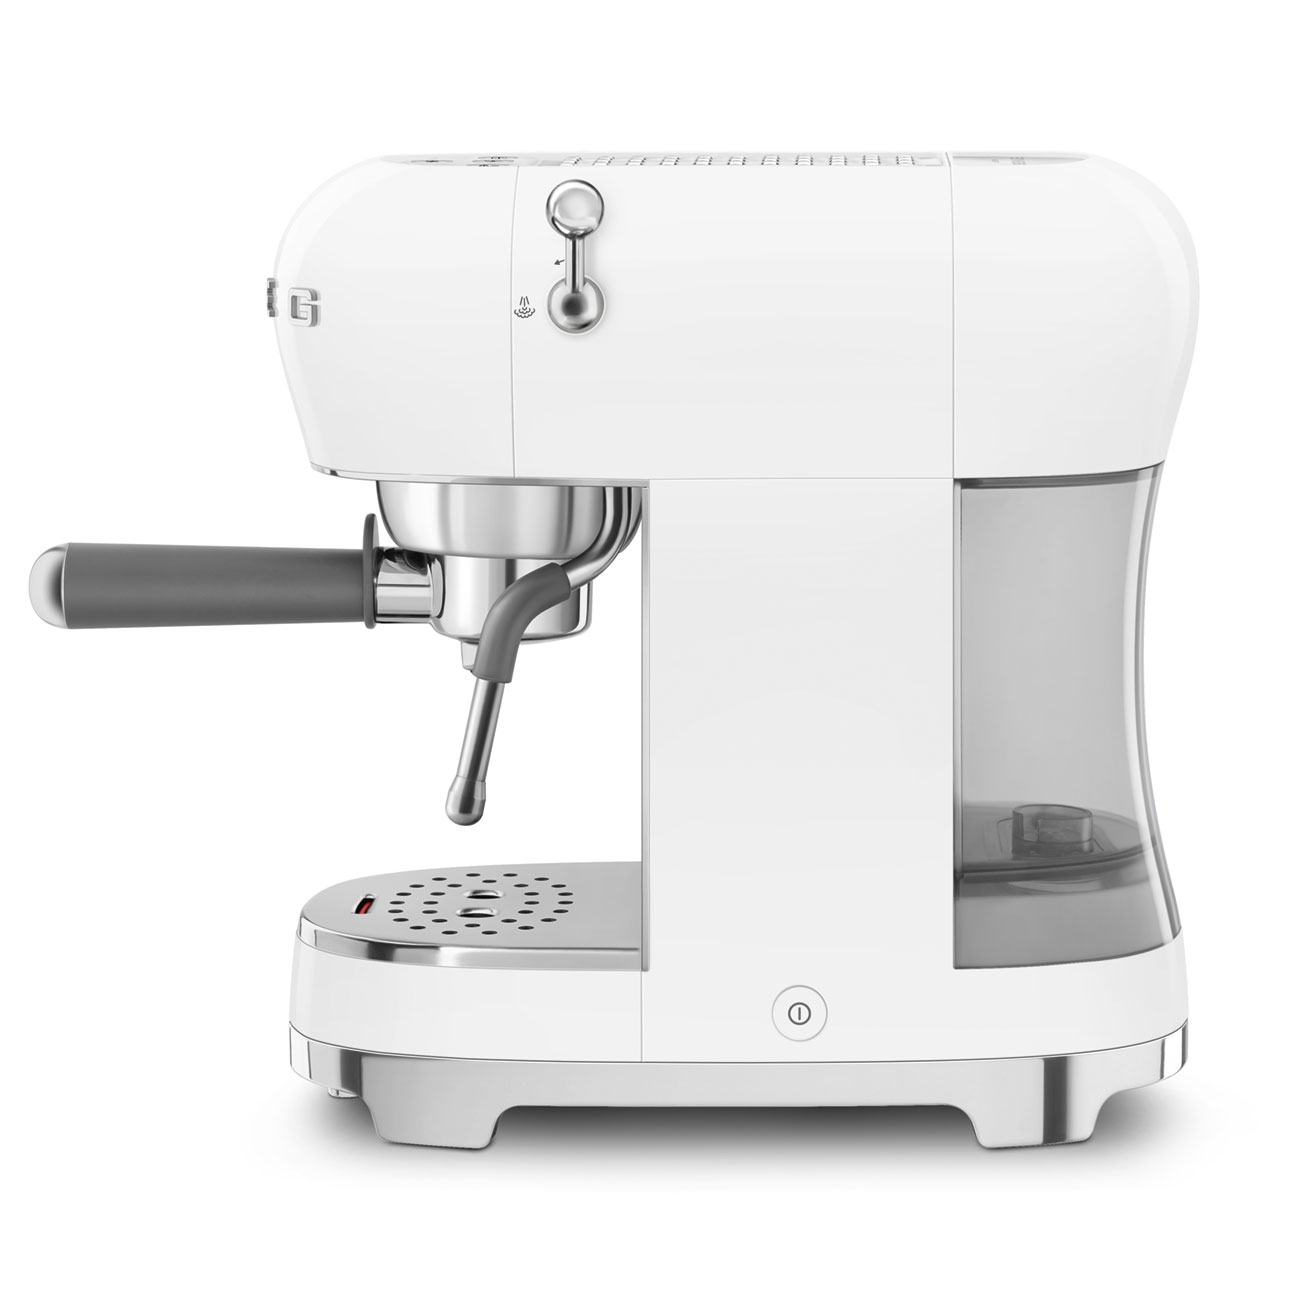 Smeg White Espresso Manual Coffee Machine with Steam Wand_2